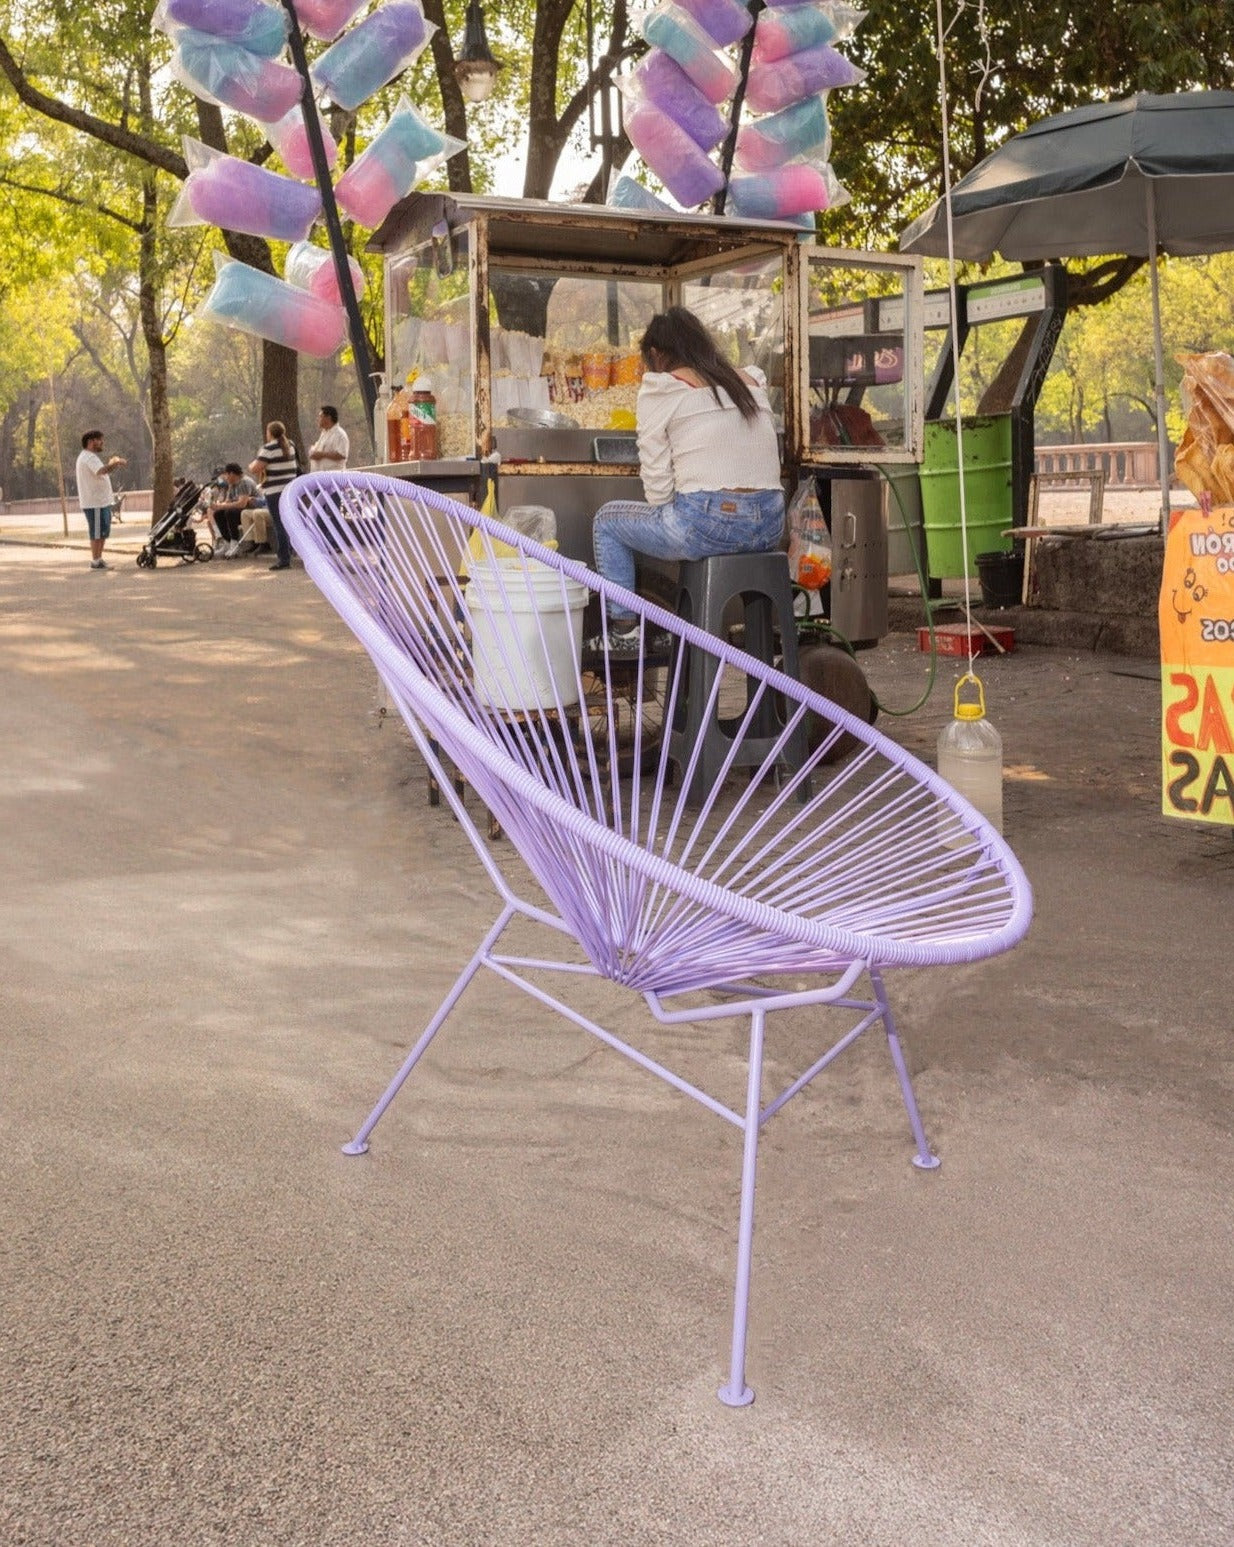 Original Acapulco Chair in der Farbe Lila. Ton in Ton